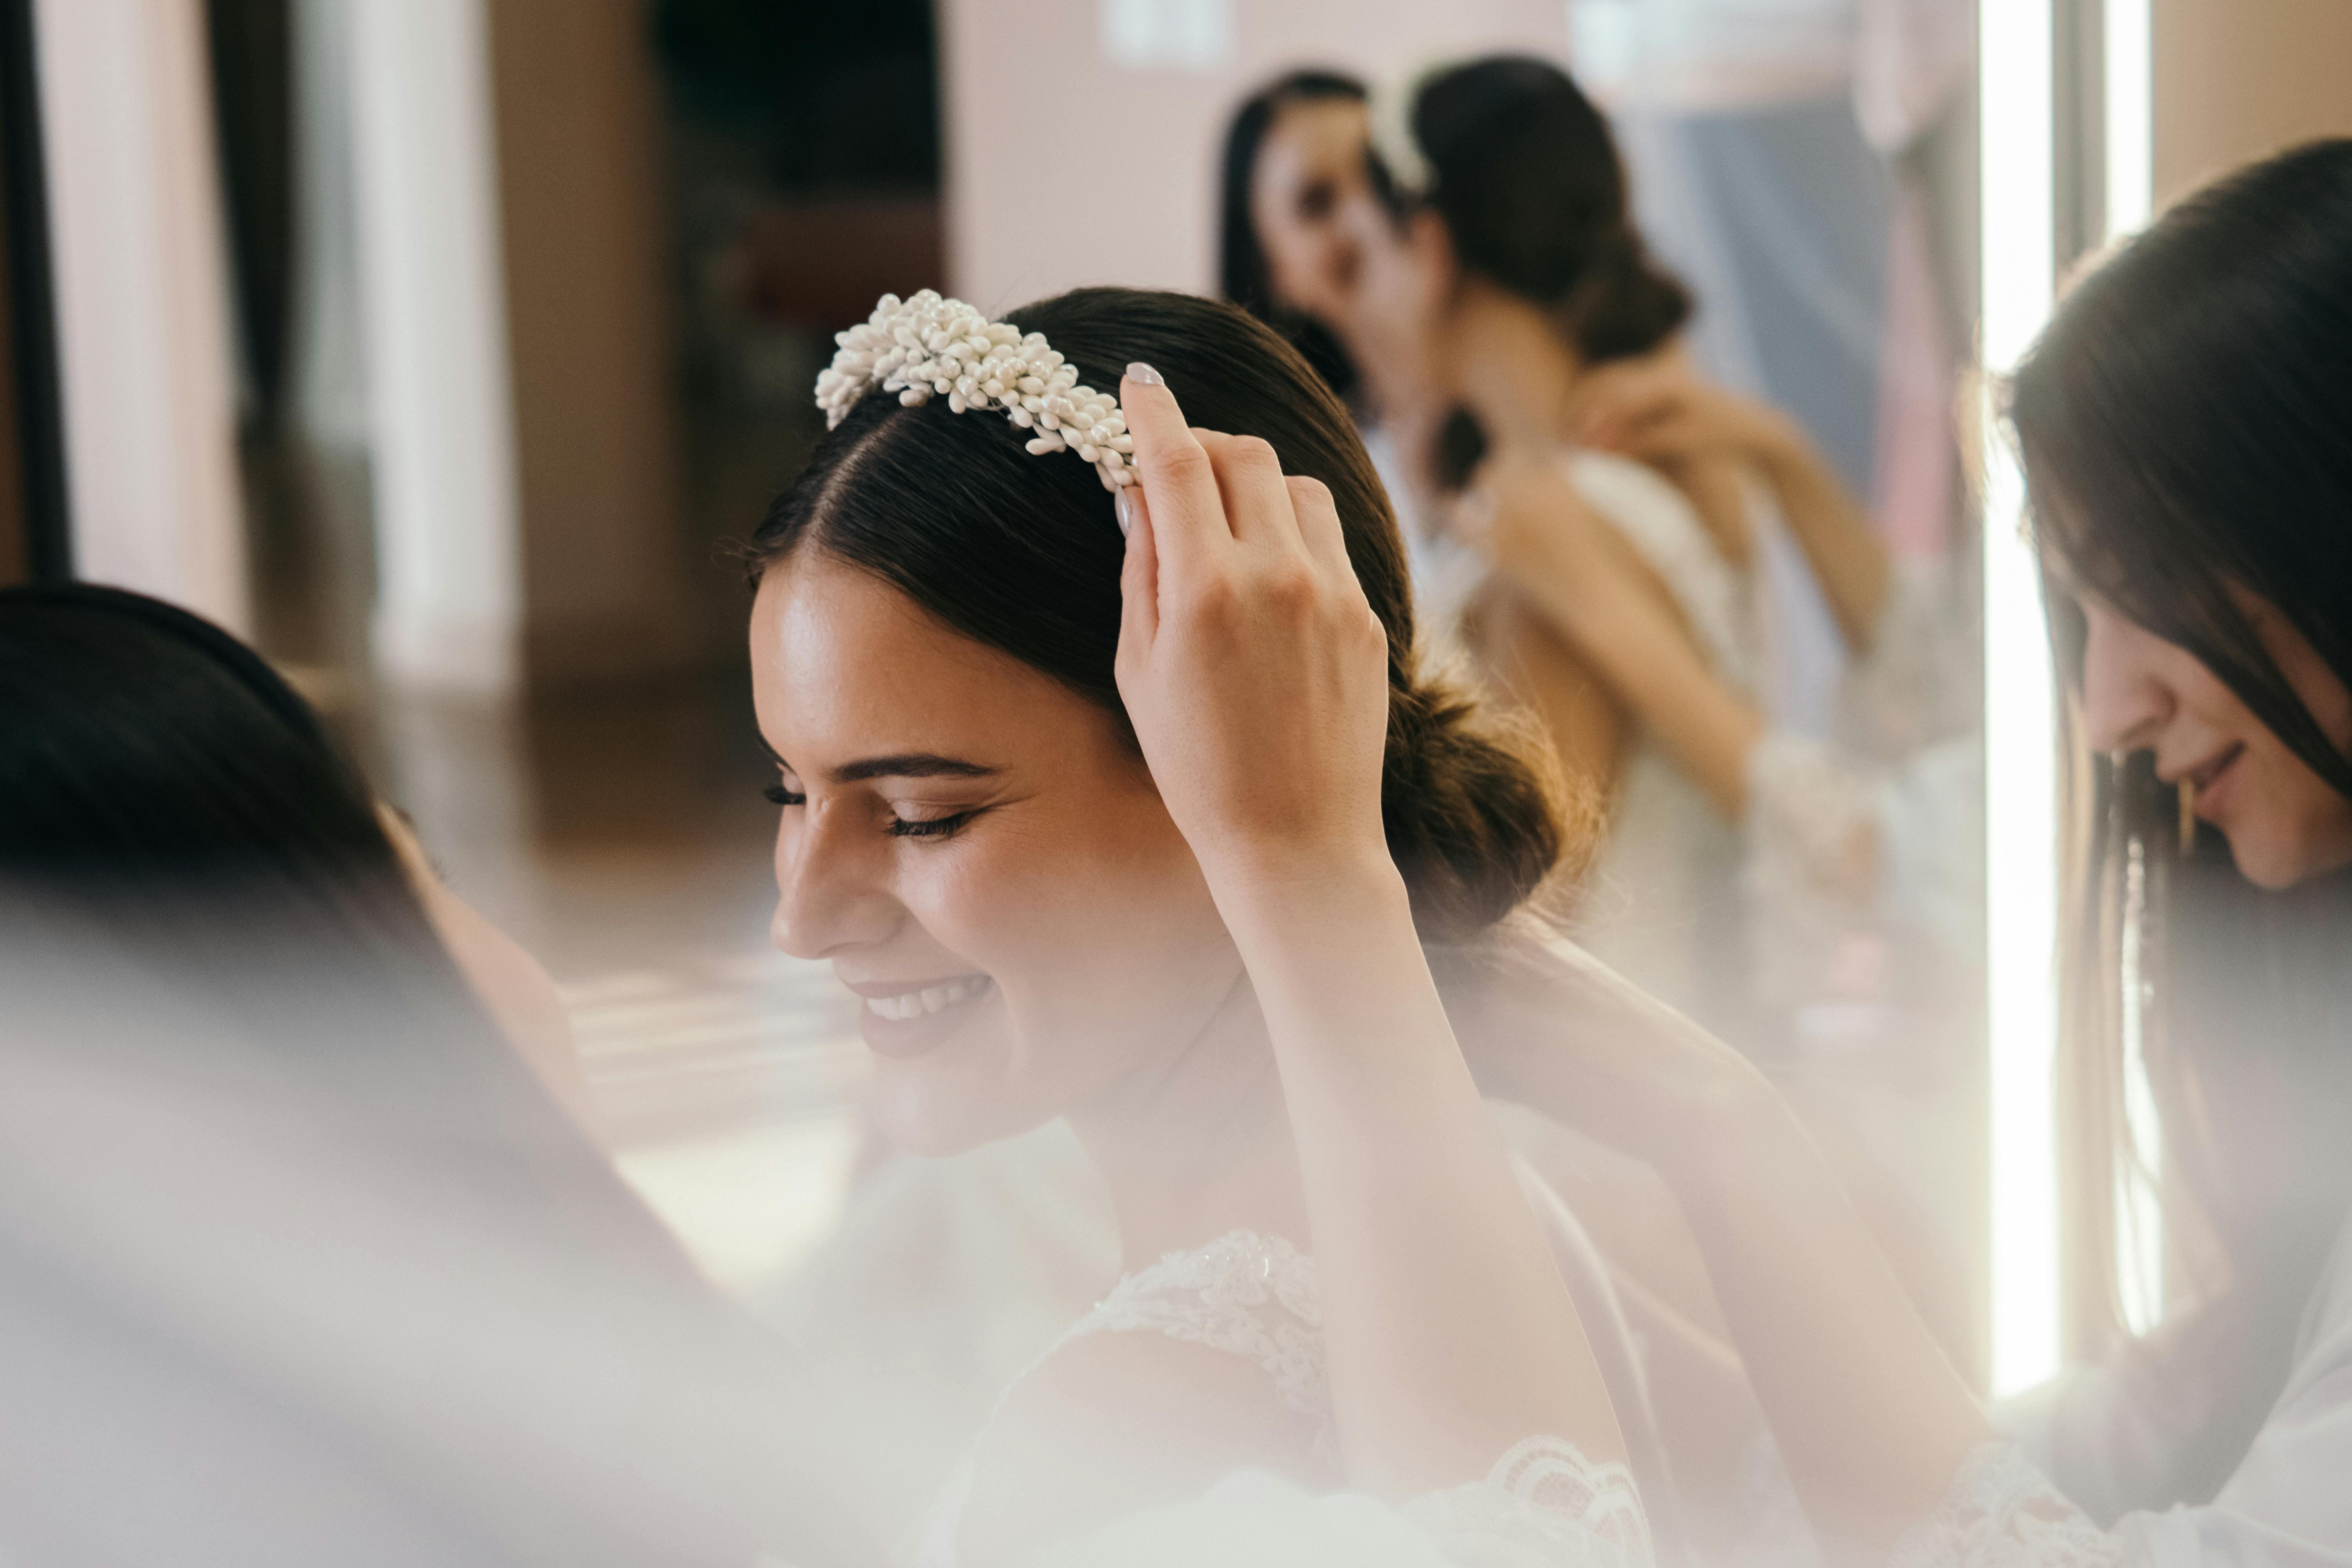 A bridesmaid putting a headband on a bride's head | Source: Pexels